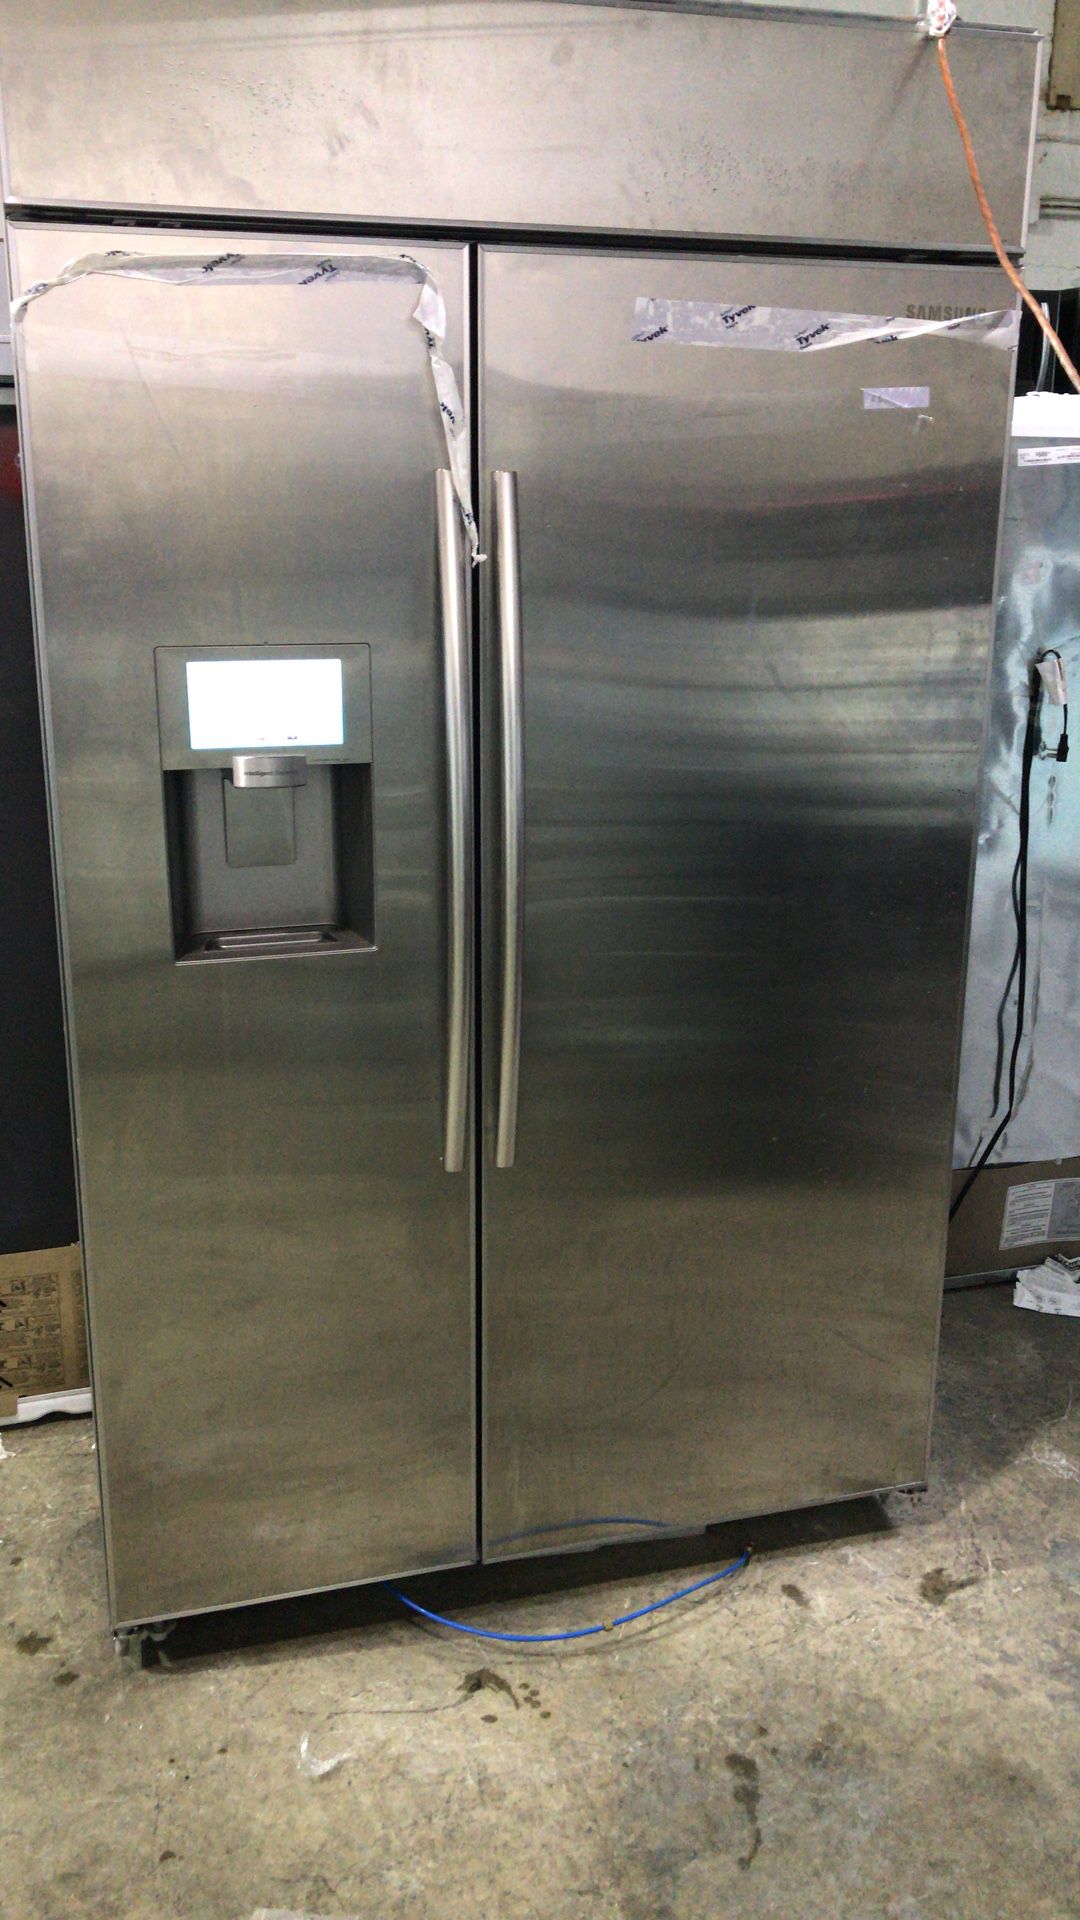 samsung 48 inches wide refrigerator